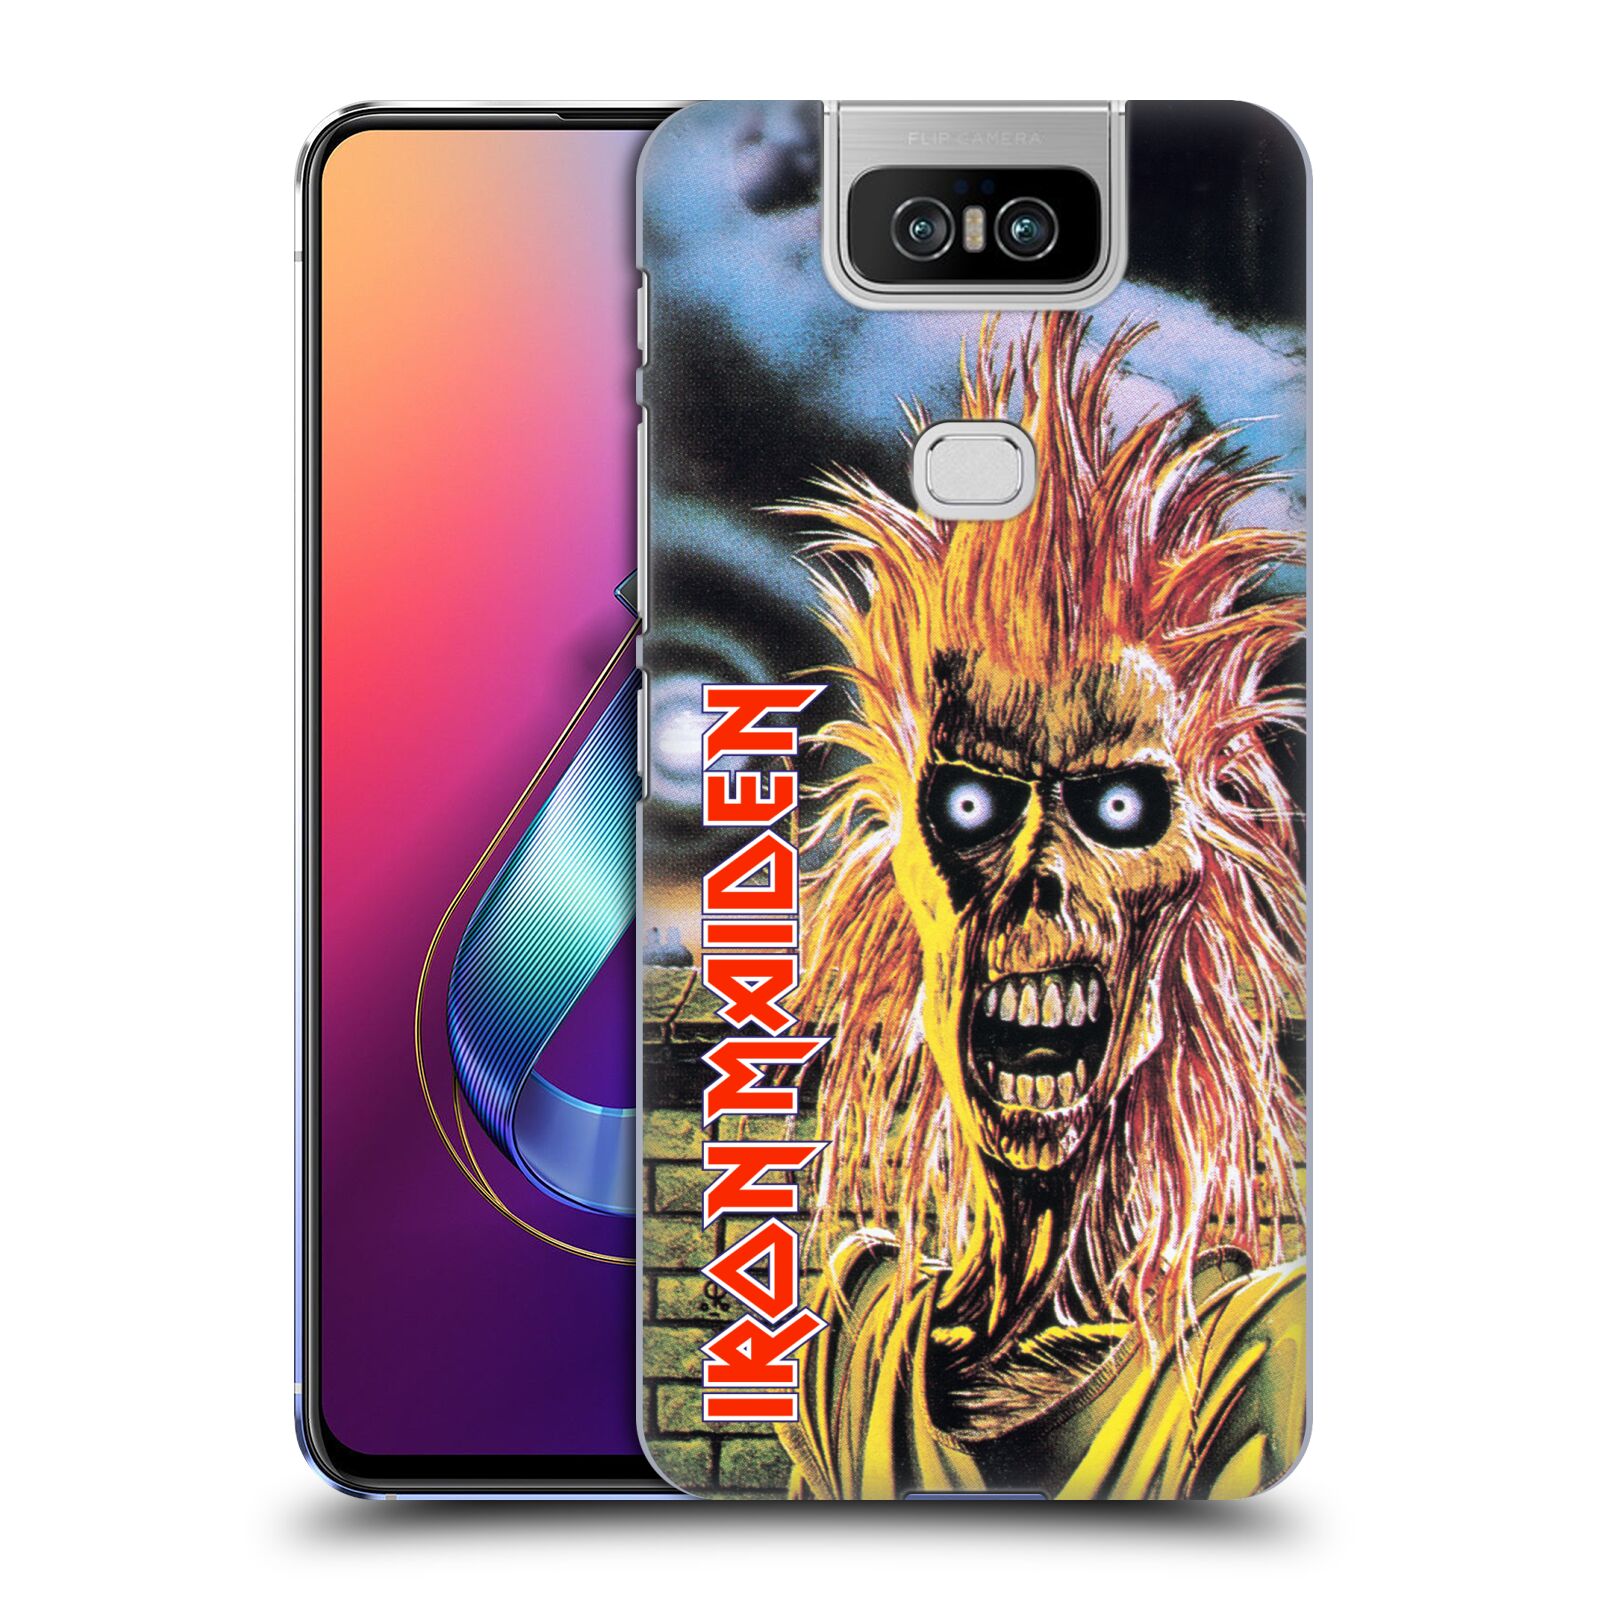 Pouzdro na mobil Asus Zenfone 6 ZS630KL - HEAD CASE - Heavymetalová skupina Iron Maiden punker